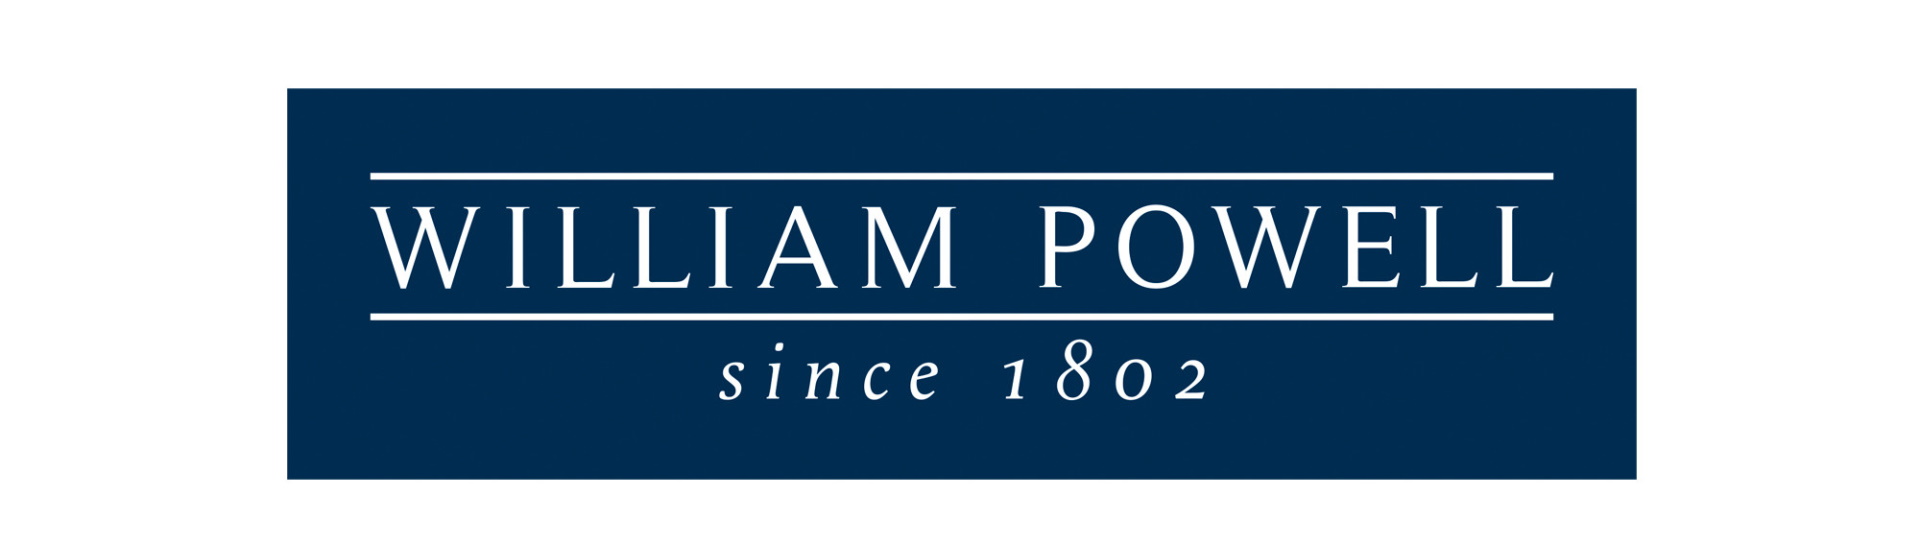 William Powell logo